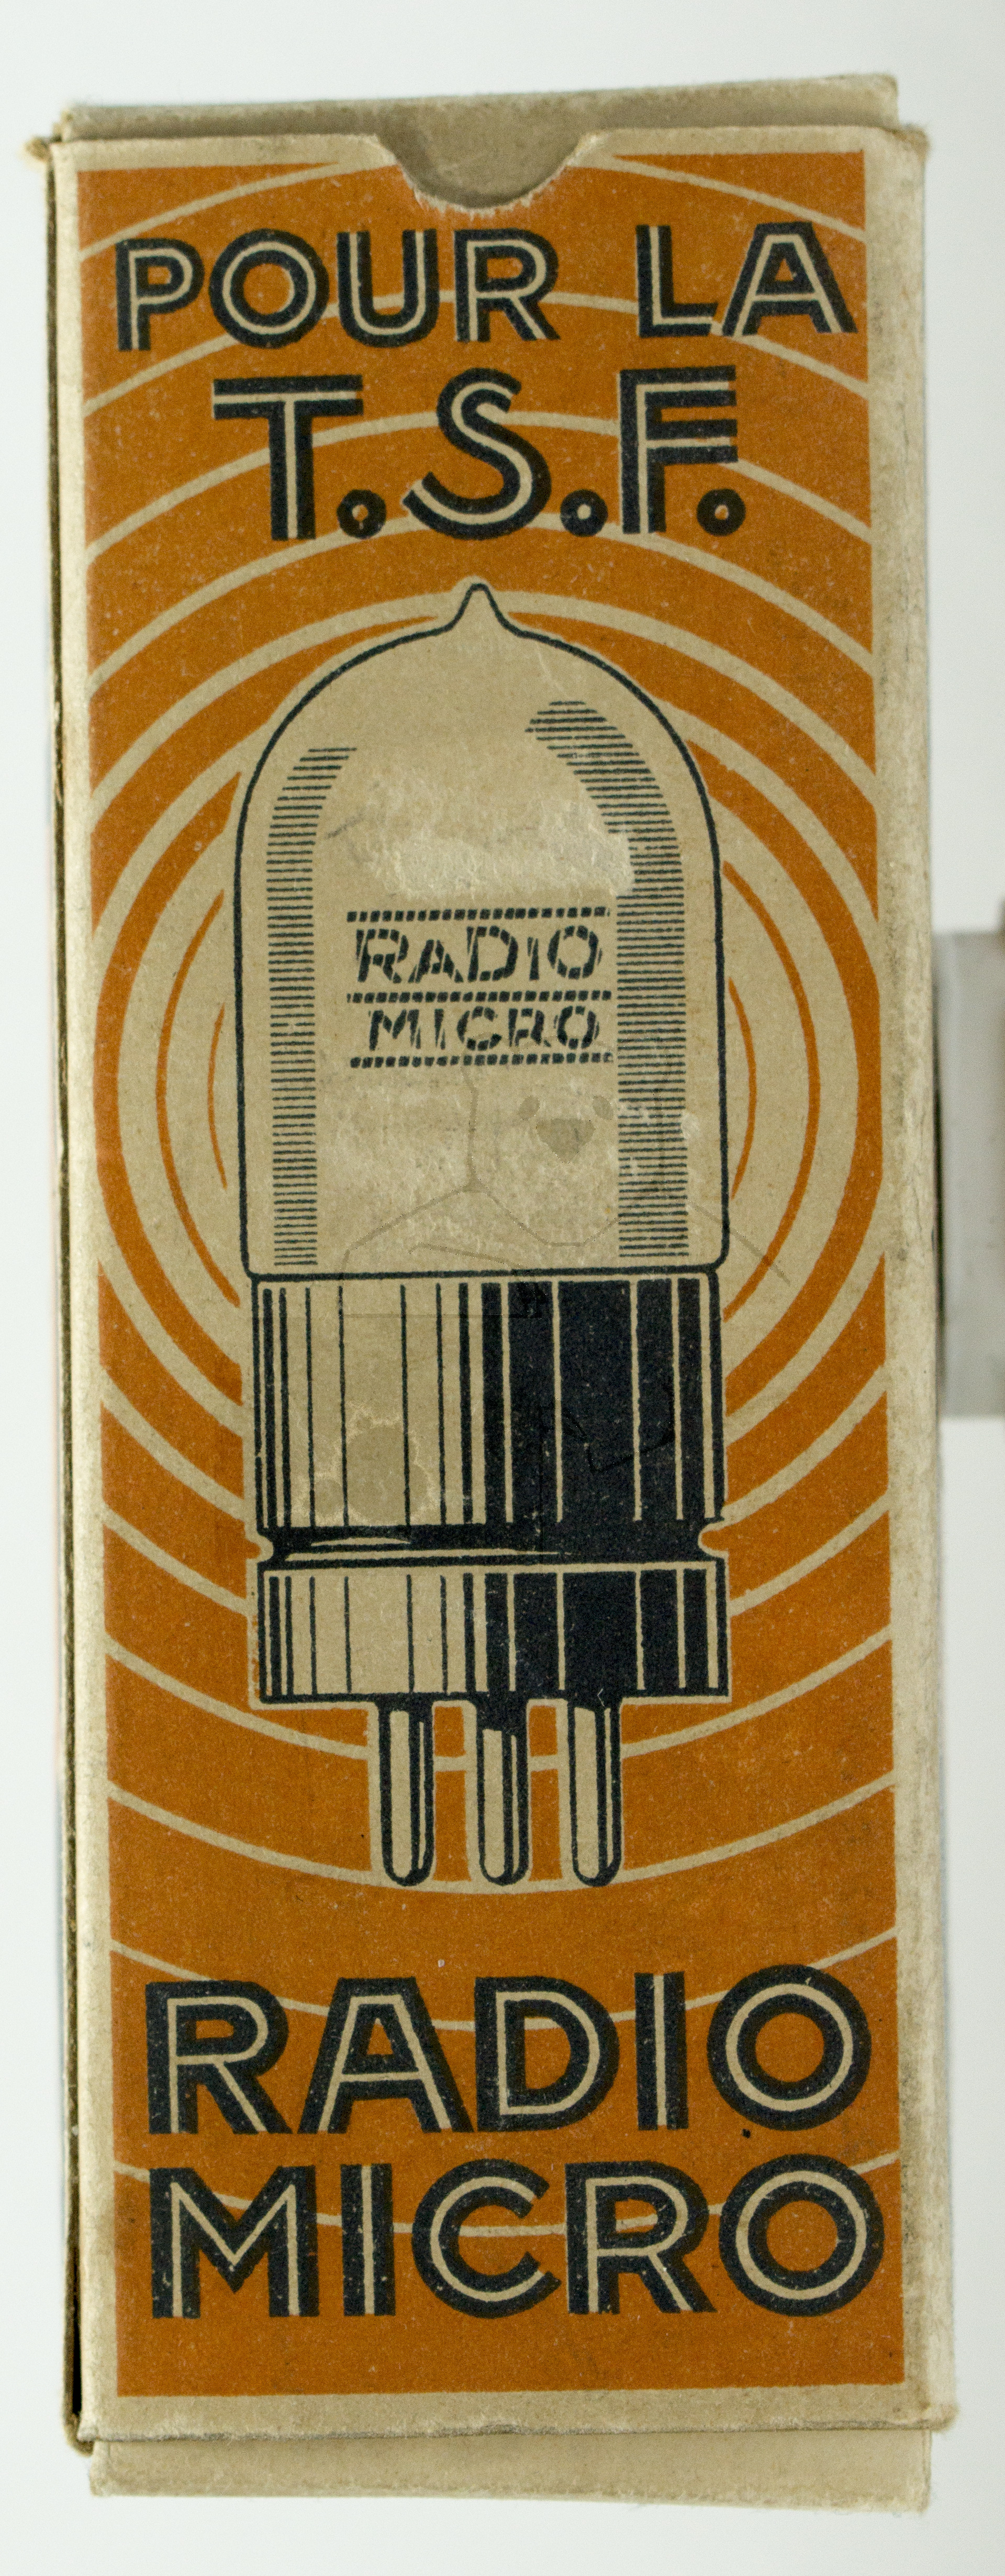 Röhre Radio Micro #7764 Verpackung Bild 1